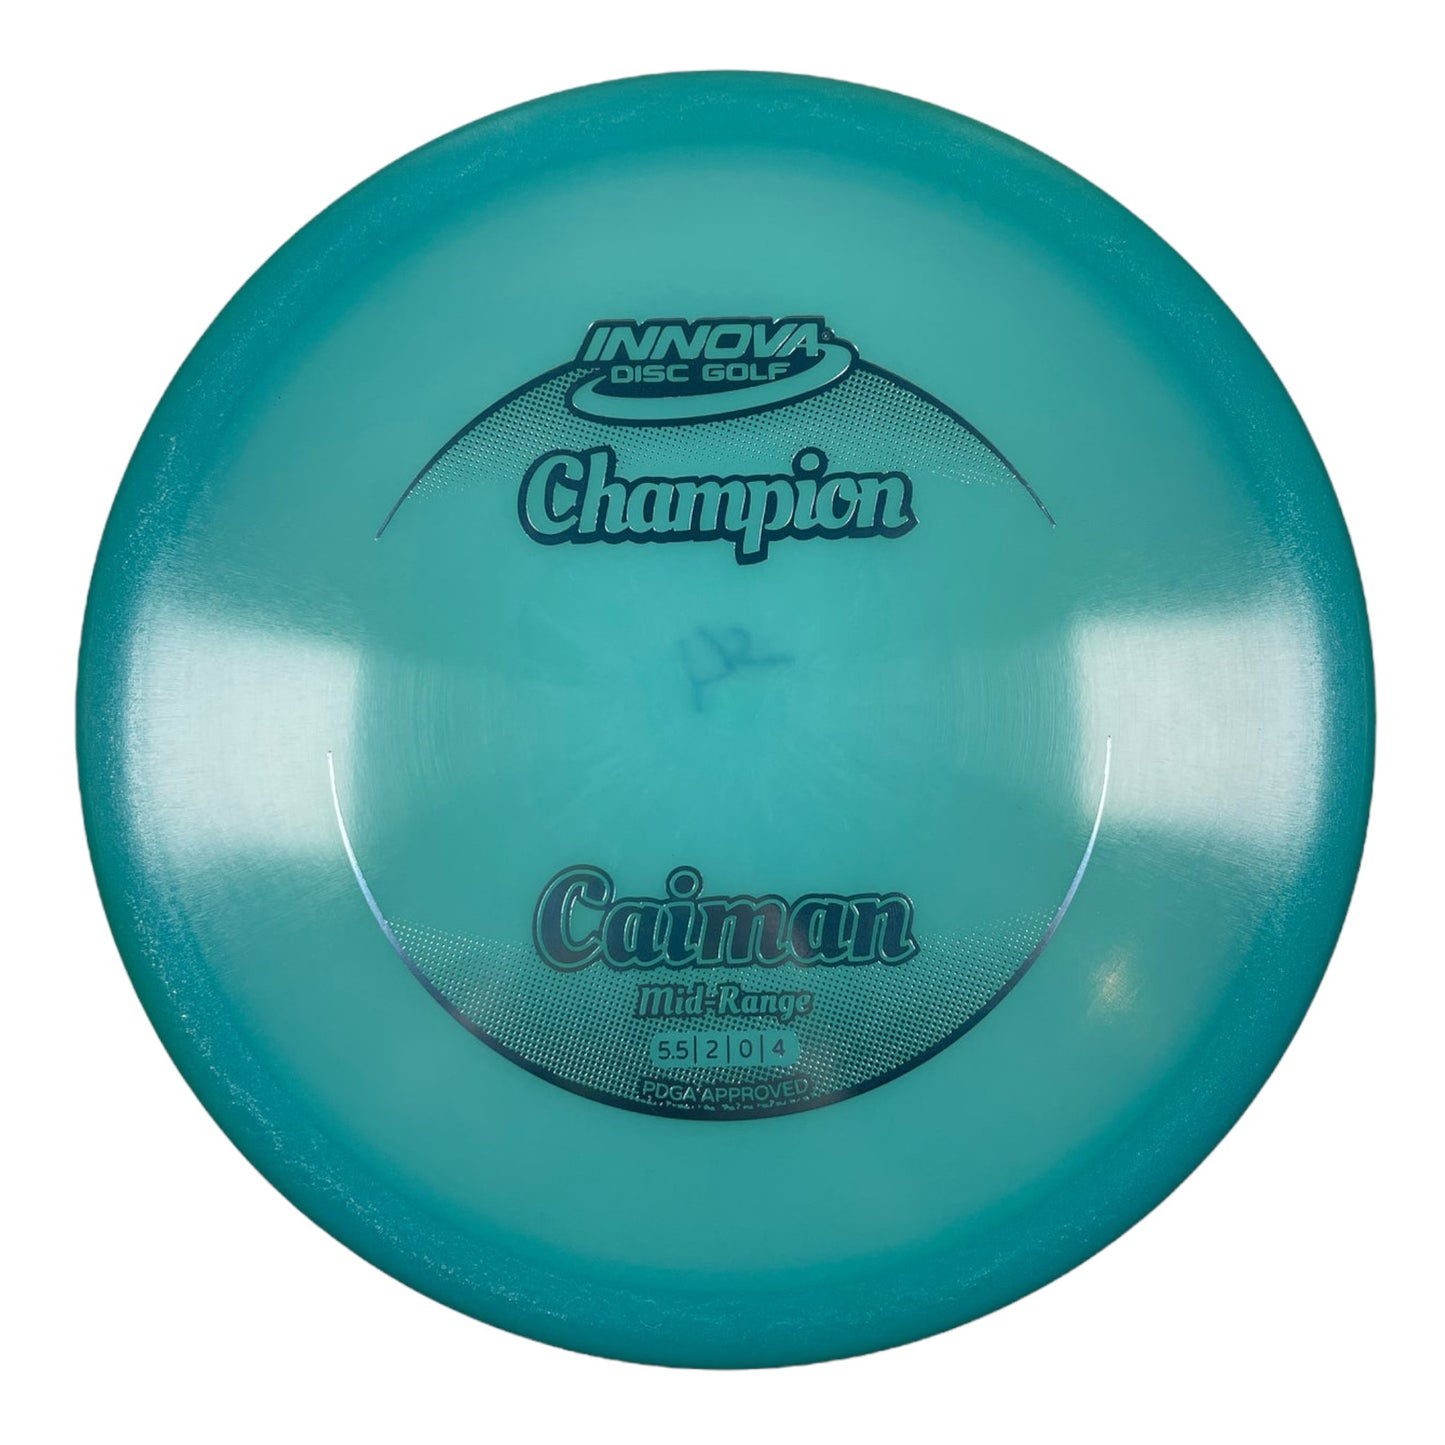 Innova Champion Discs Caiman | Champion | Blue/Blue 175g Disc Golf